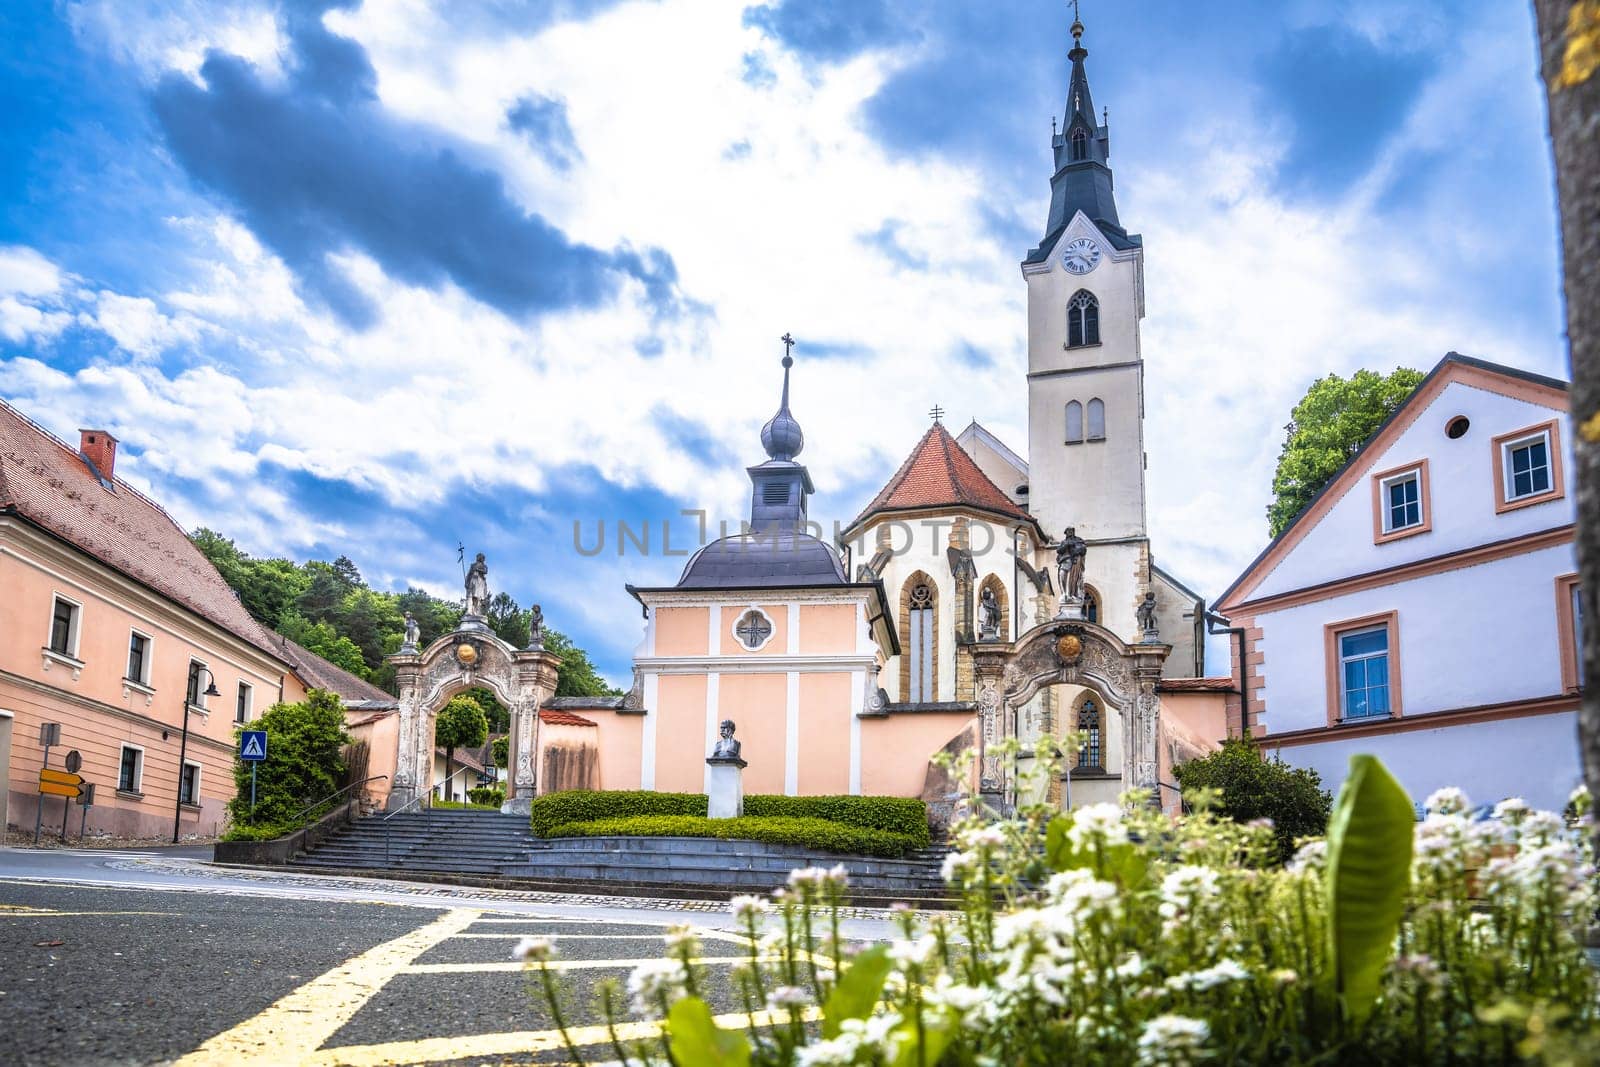 Town of Ljutomer church view, northeastern Slovenia